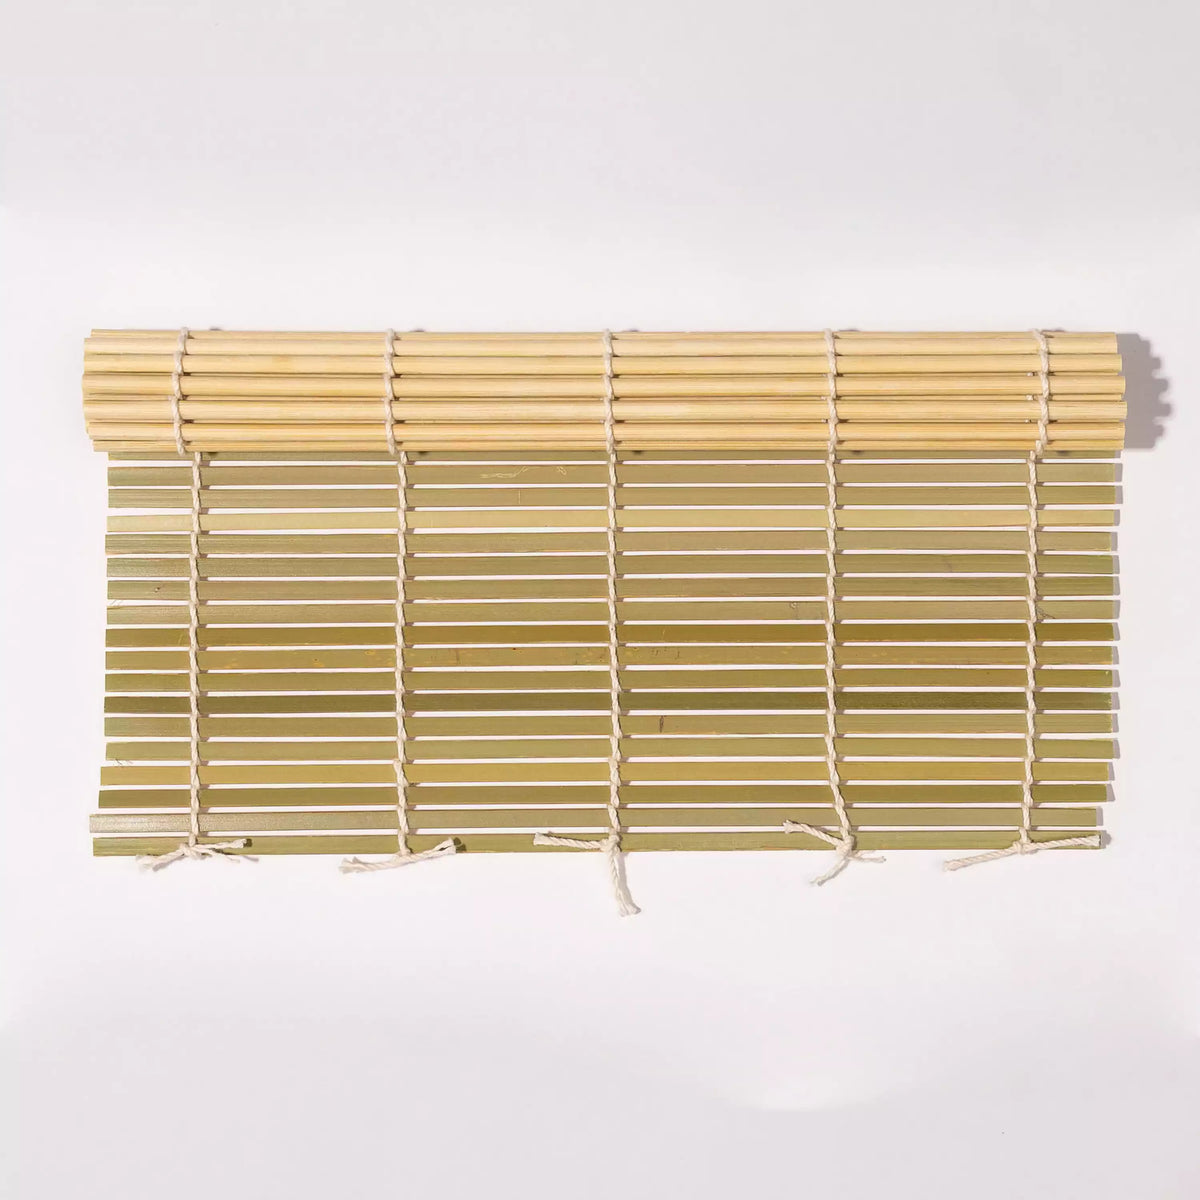 1pc Plain Sushi Roll Mat, Bamboo Kitchen Sushi Rolling Mat For Kitchen